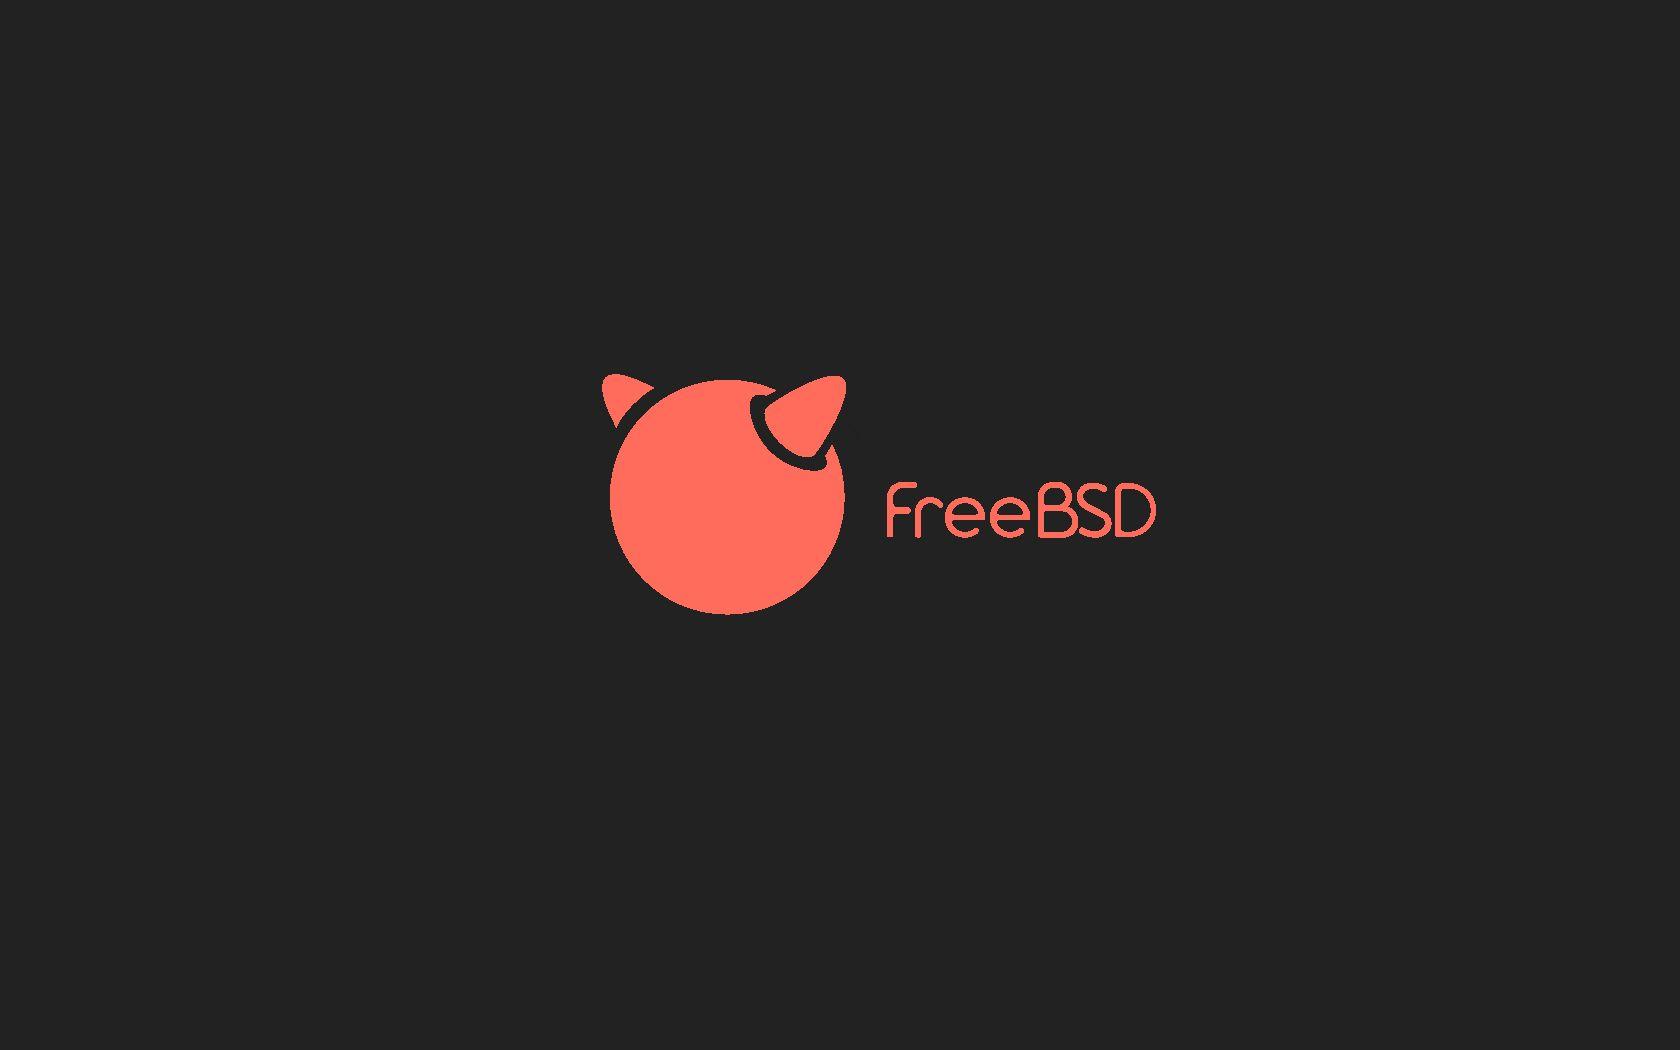 FreeBSD Wallpaper. Linux Wallpaper